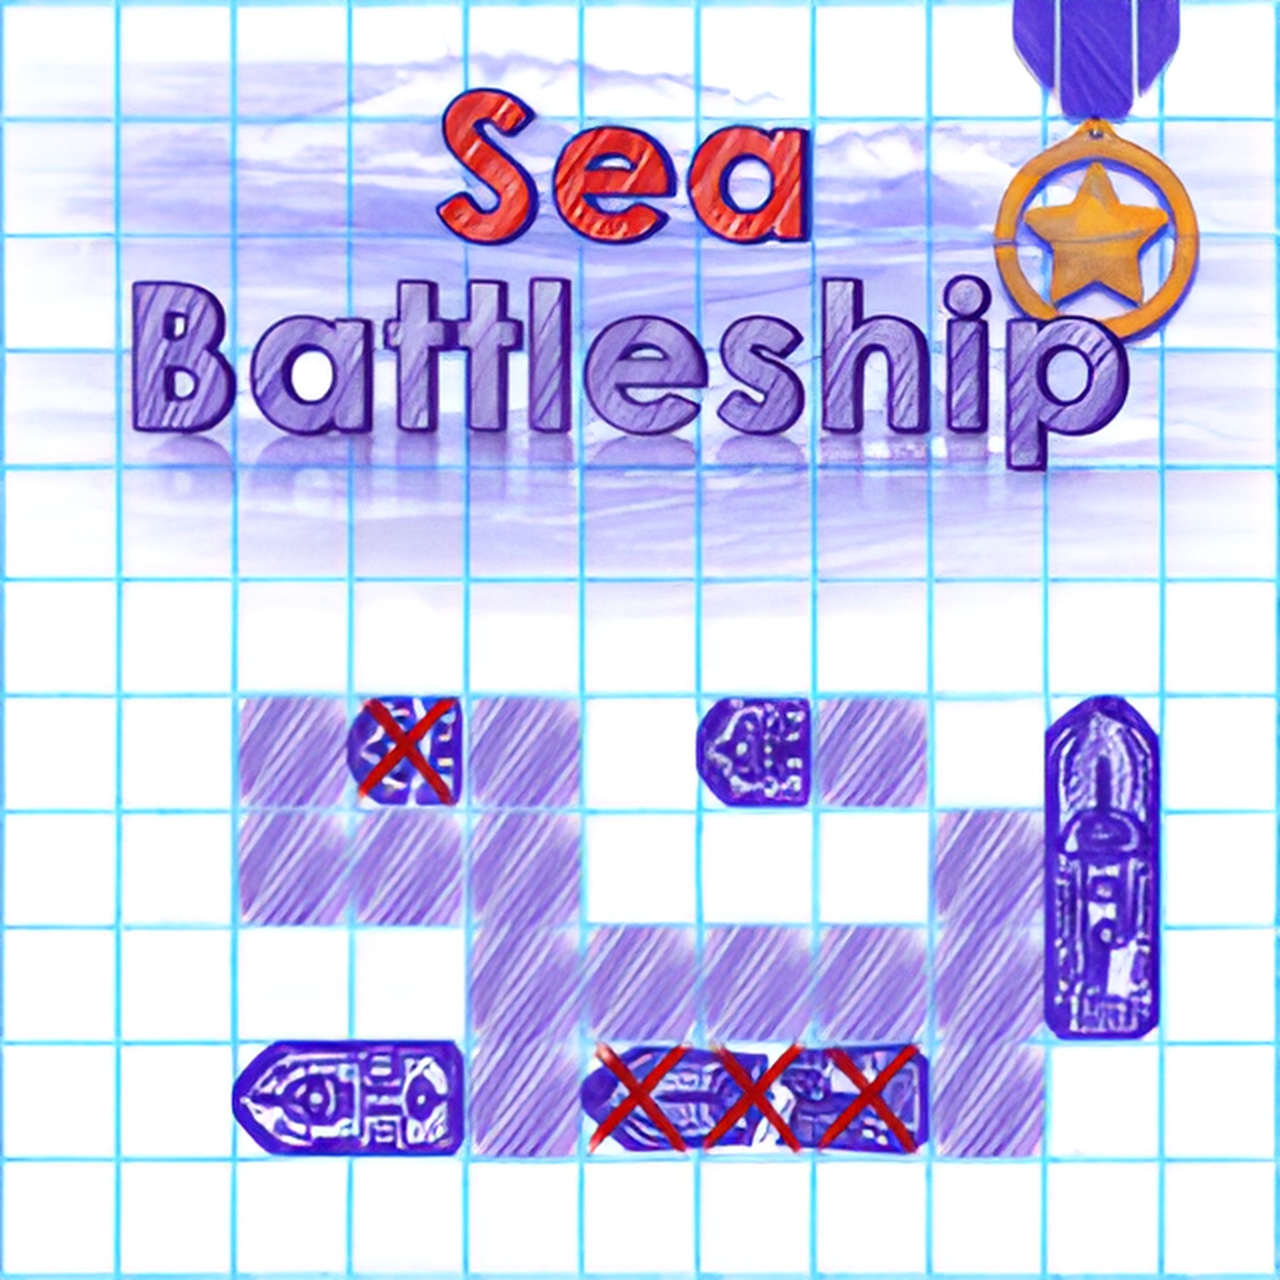 Image Sea Battleship - Play Free Online Multiplayer Board Game